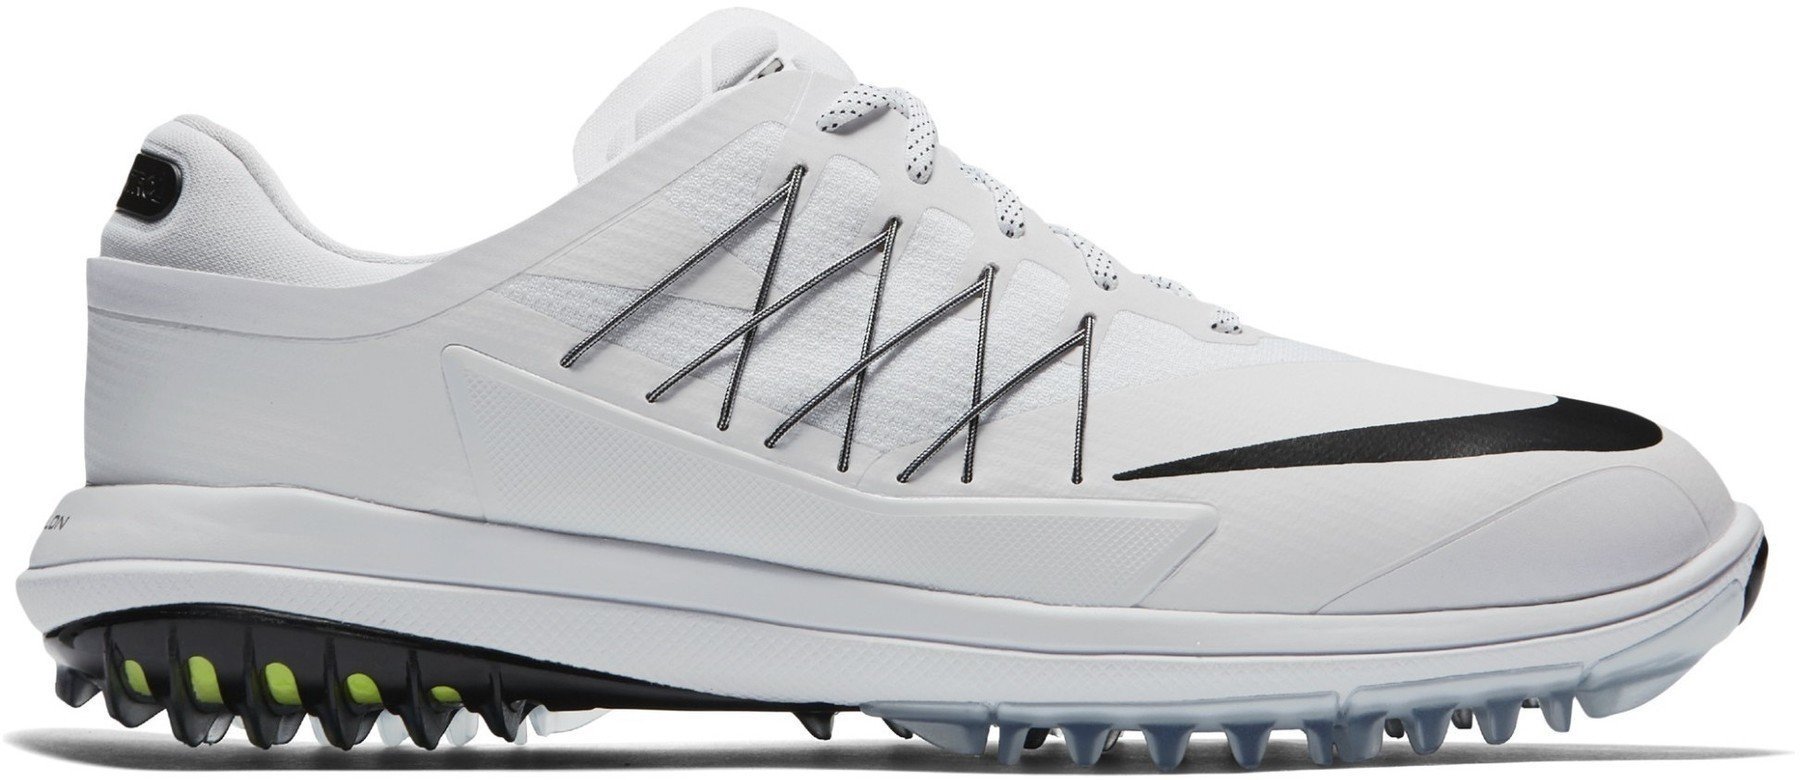 Miesten golfkengät Nike Lunar Control Vapor Mens Golf Shoes White US 9